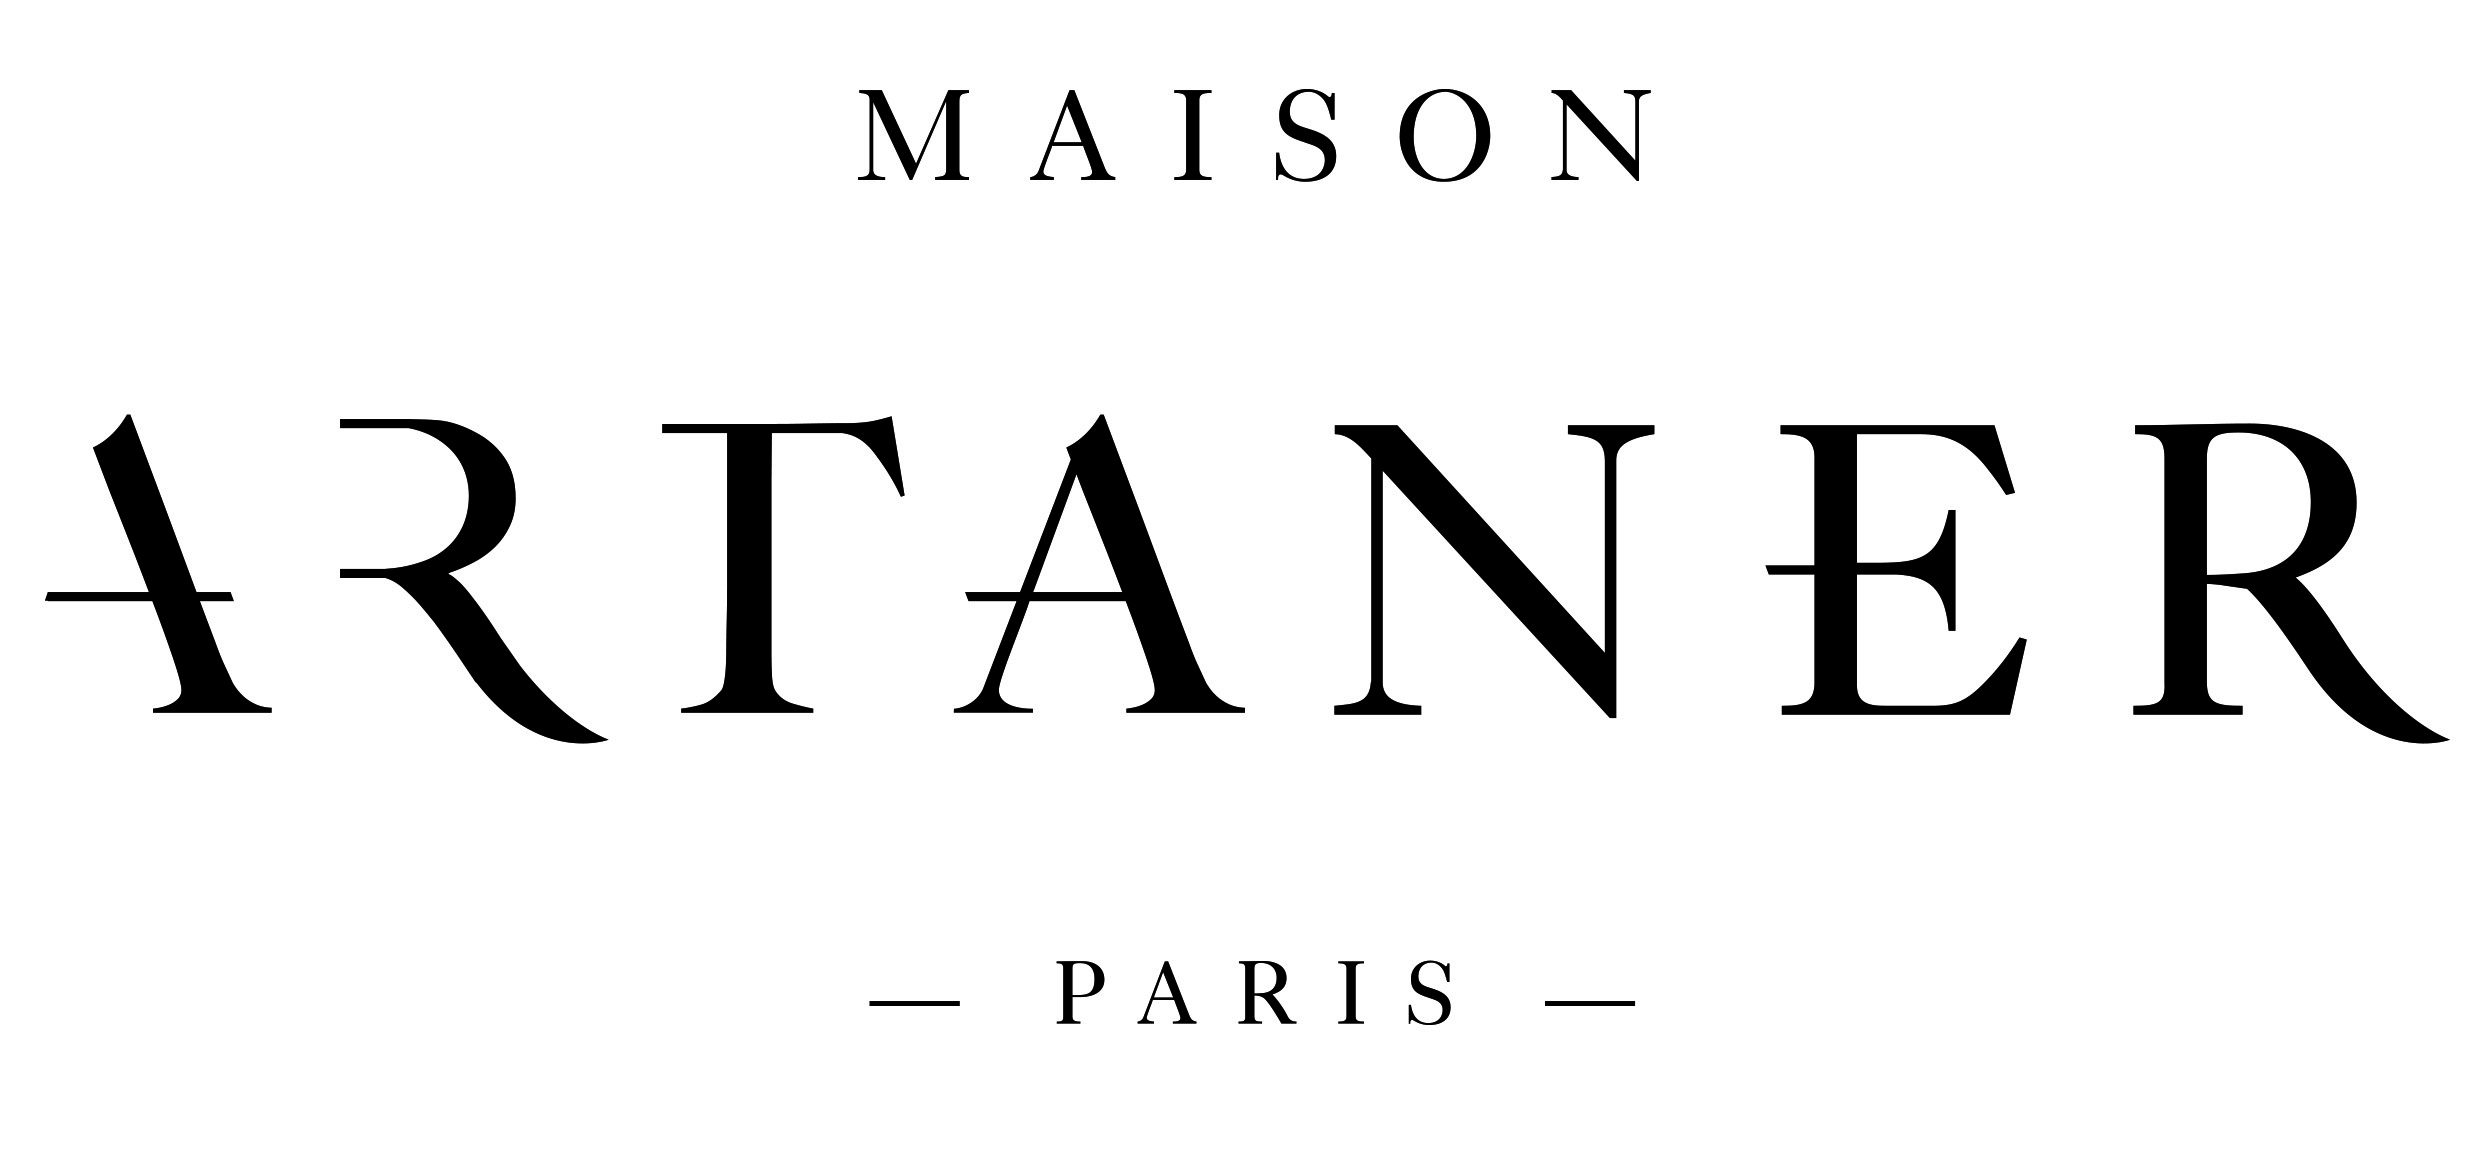 MAISON ARTANER PARIS